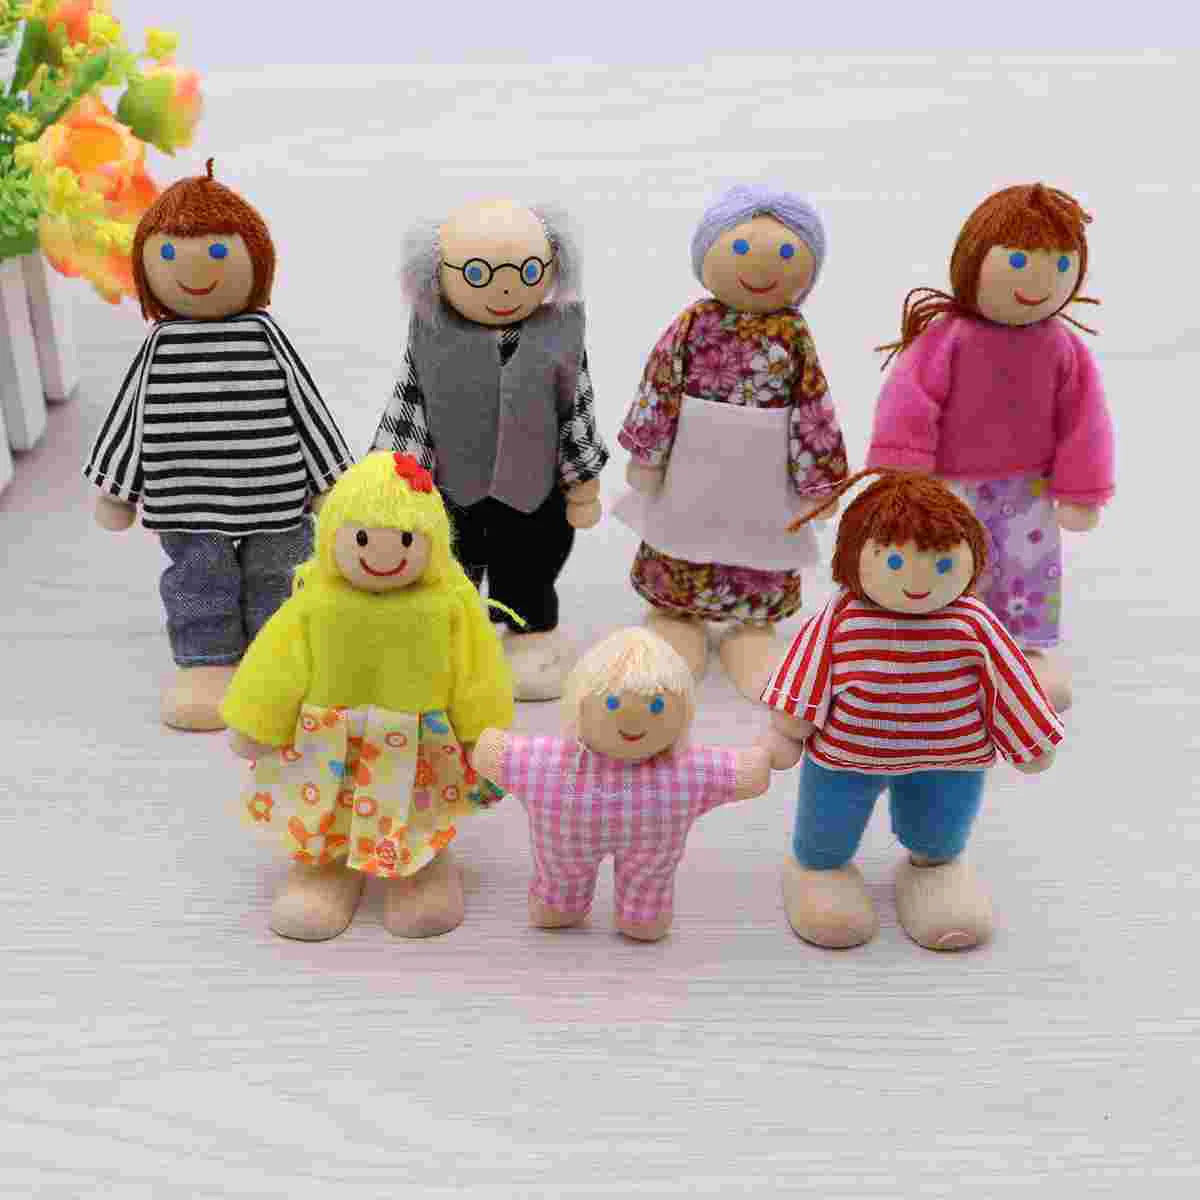 Wooden Family Member Dolls Set for Kids Pretend Play - 7 Pieces - ToylandEU